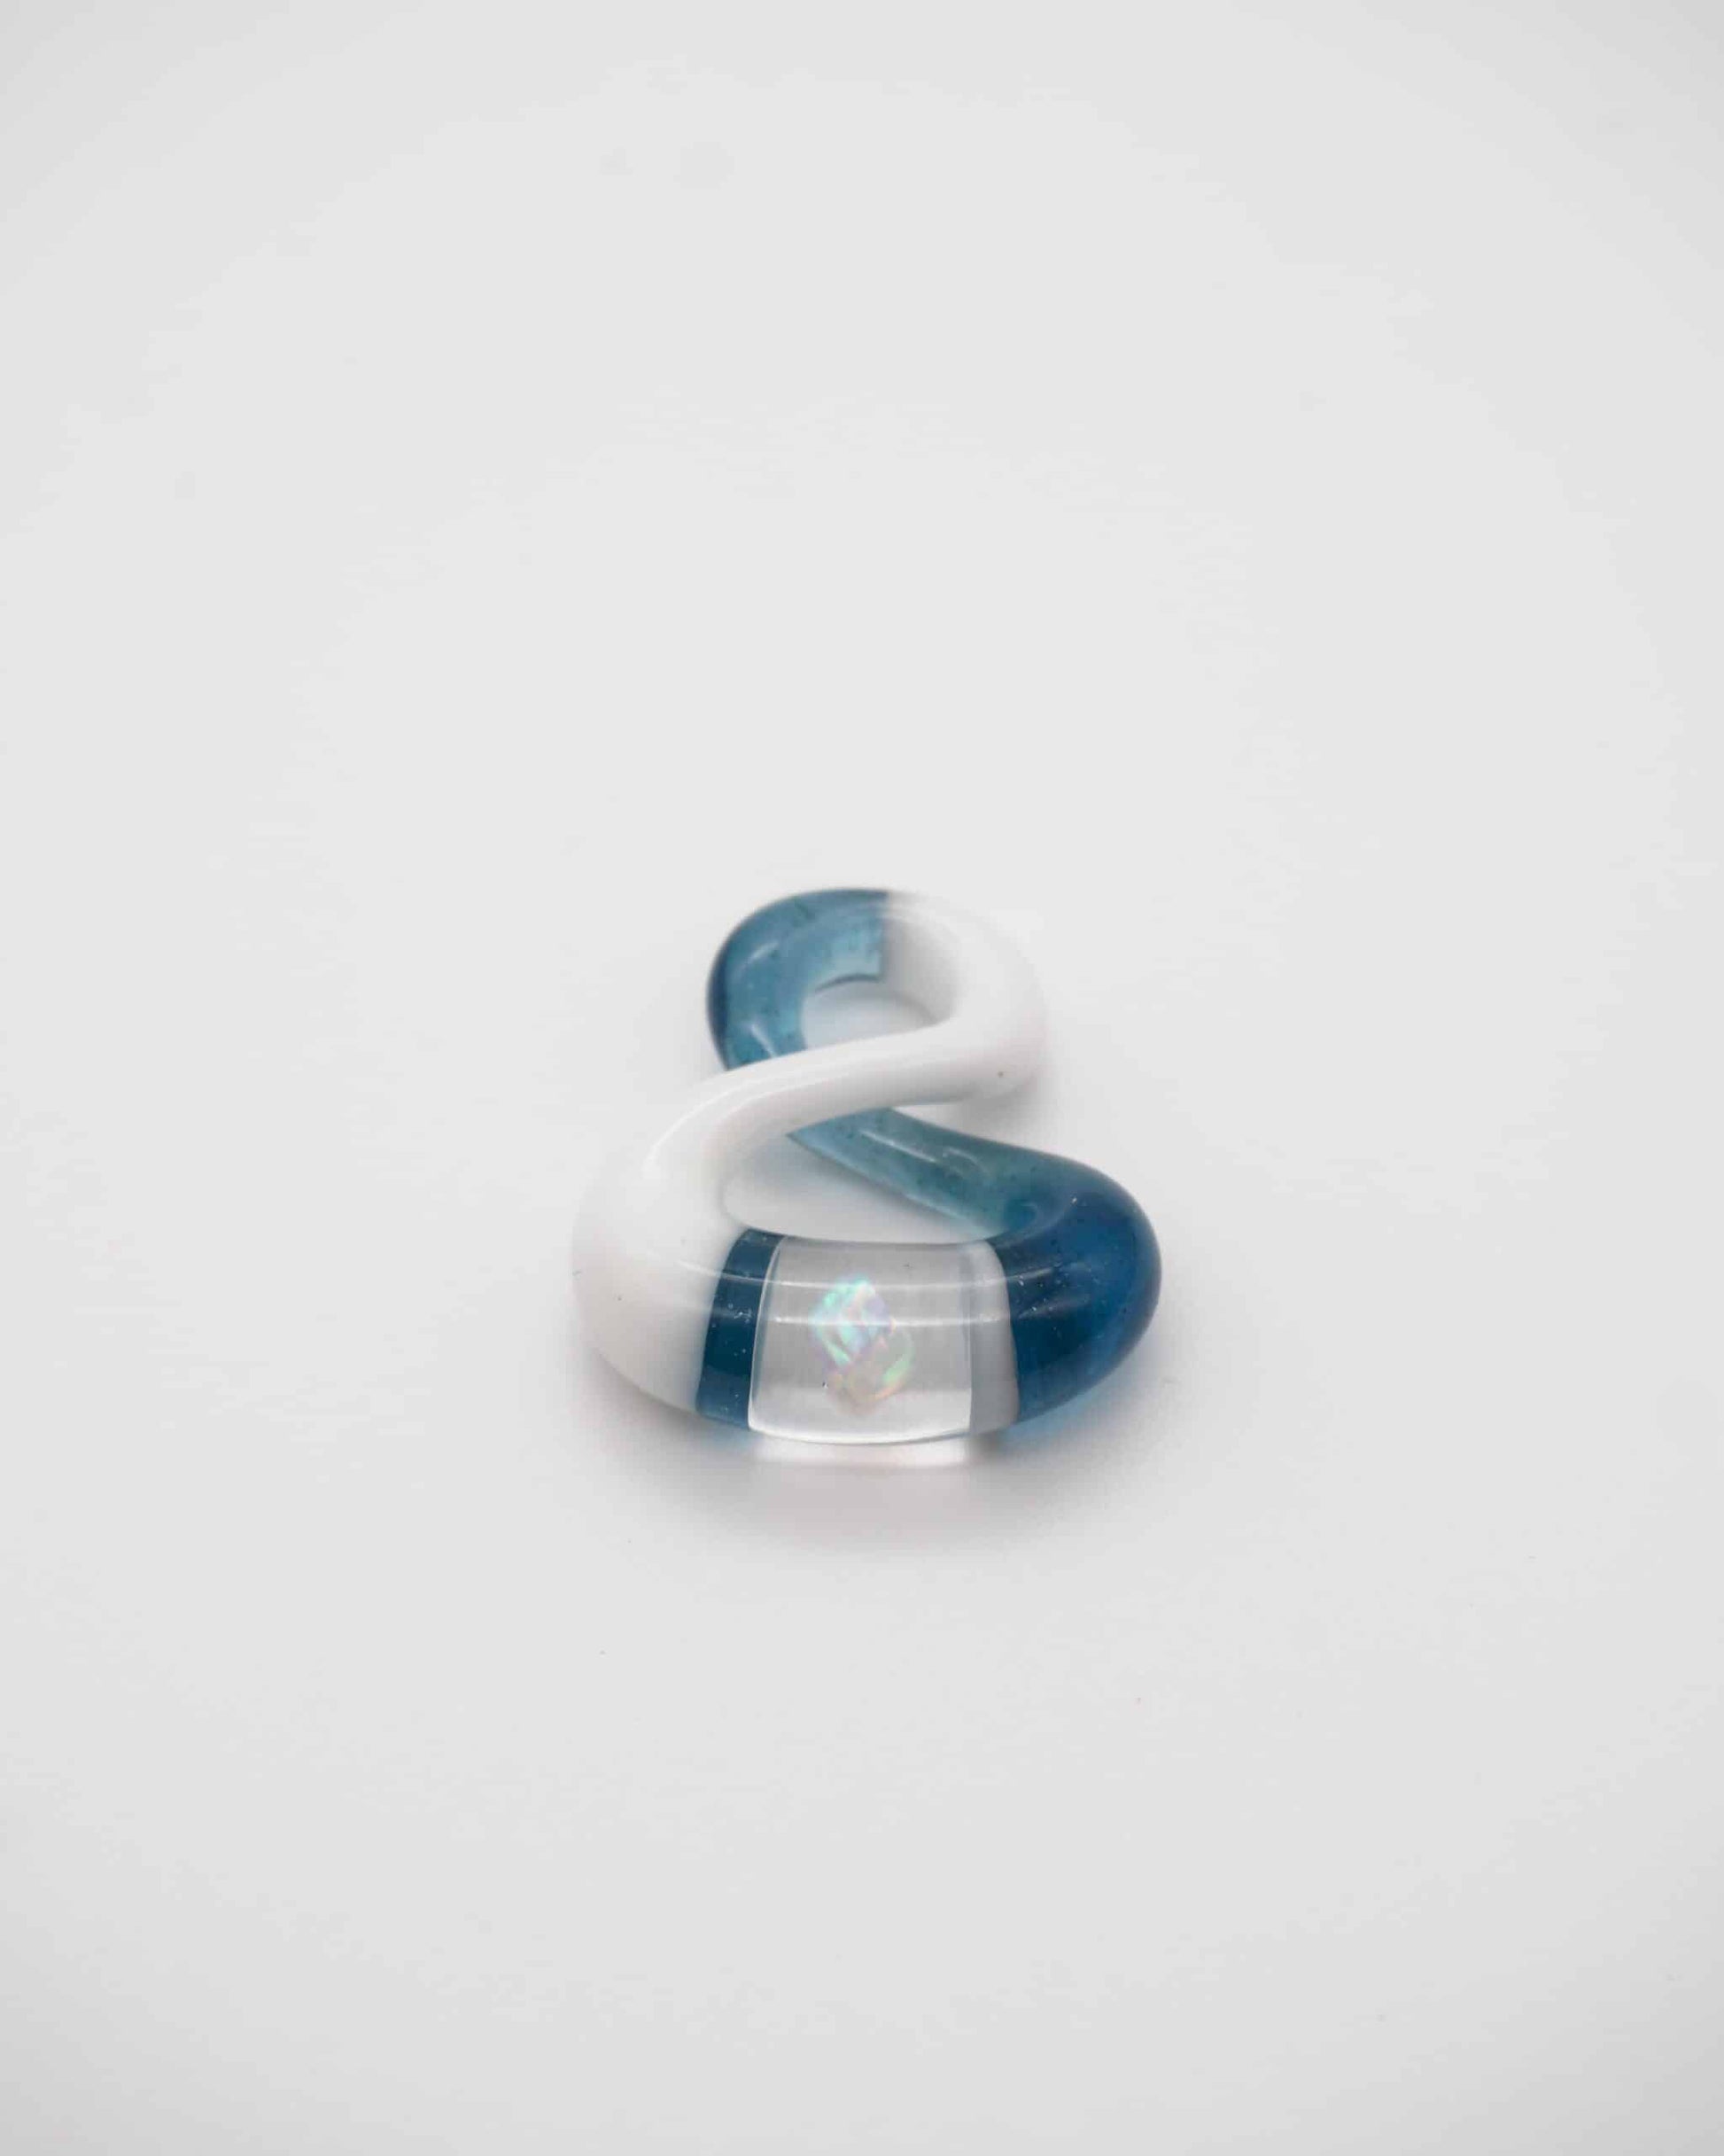 sophisticated glass pendant - Aqua/White Mini Infinity Pendant by Nateylove